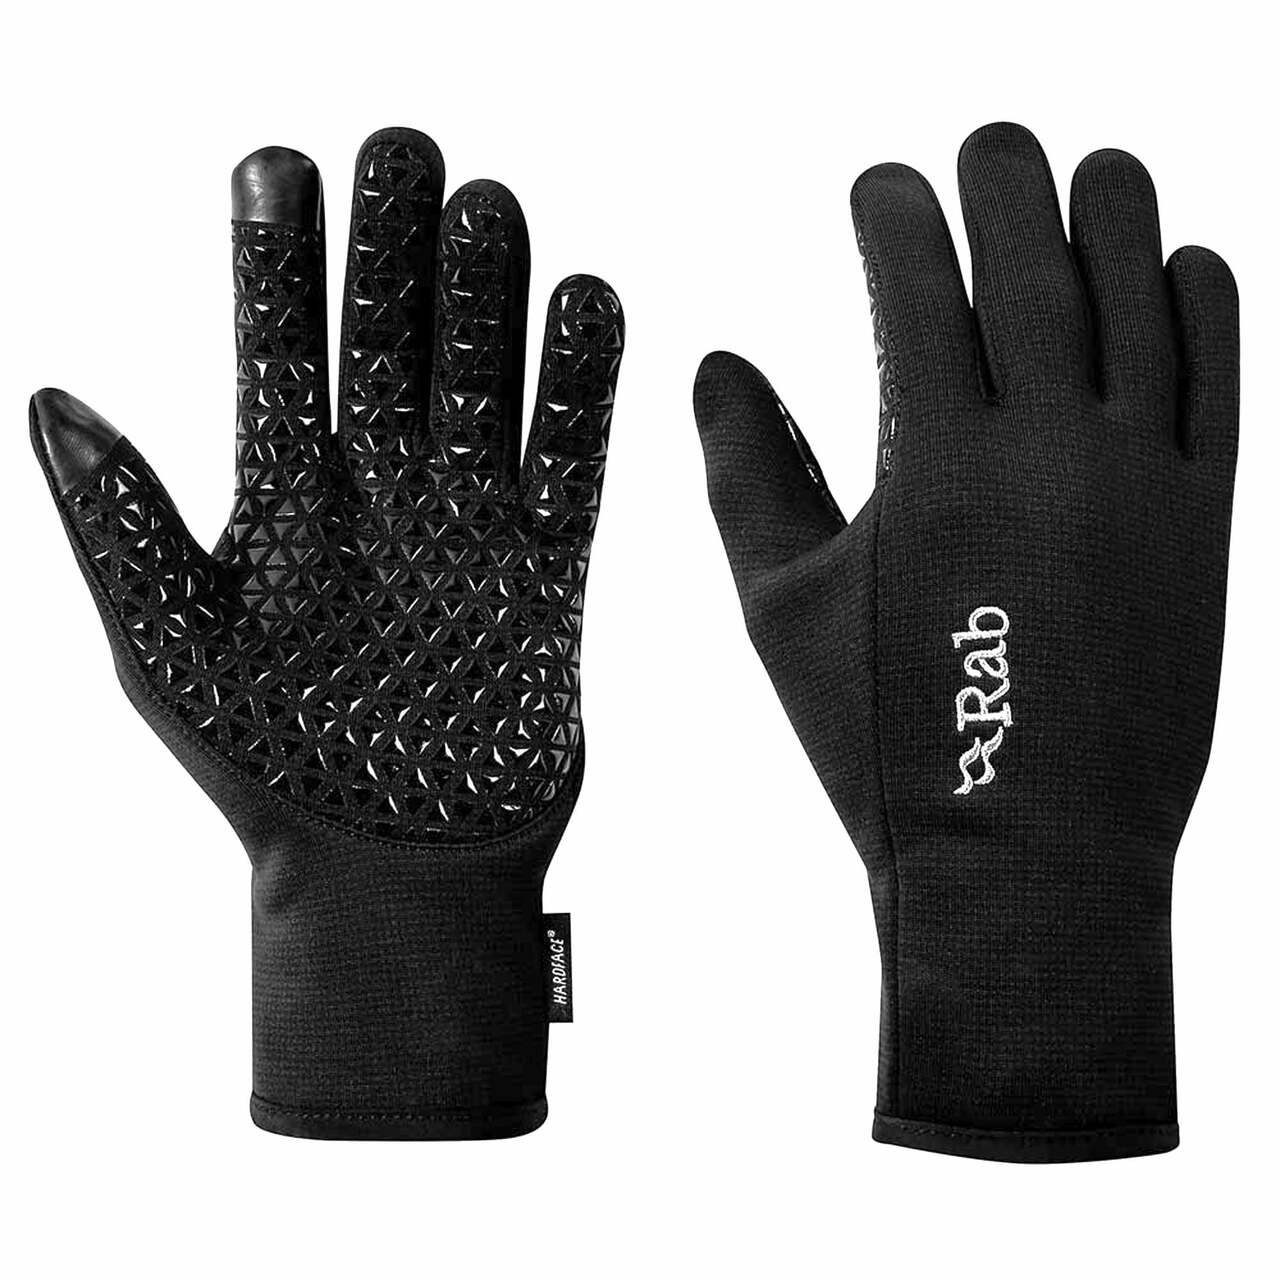 Rab Phantom Contact Grip Gloves, UK